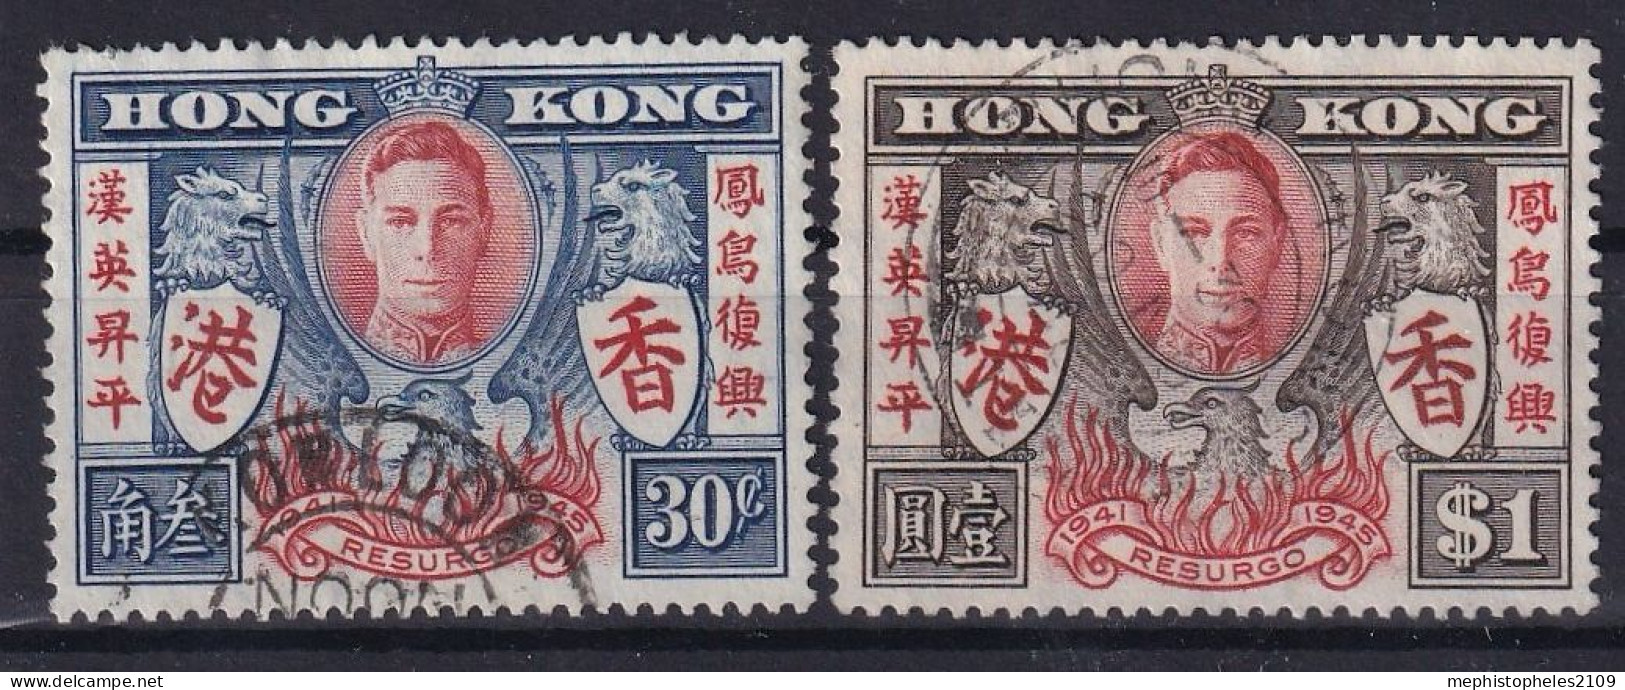 HONGKONG 1946 - Canceled - Sc# 174, 175 - Used Stamps